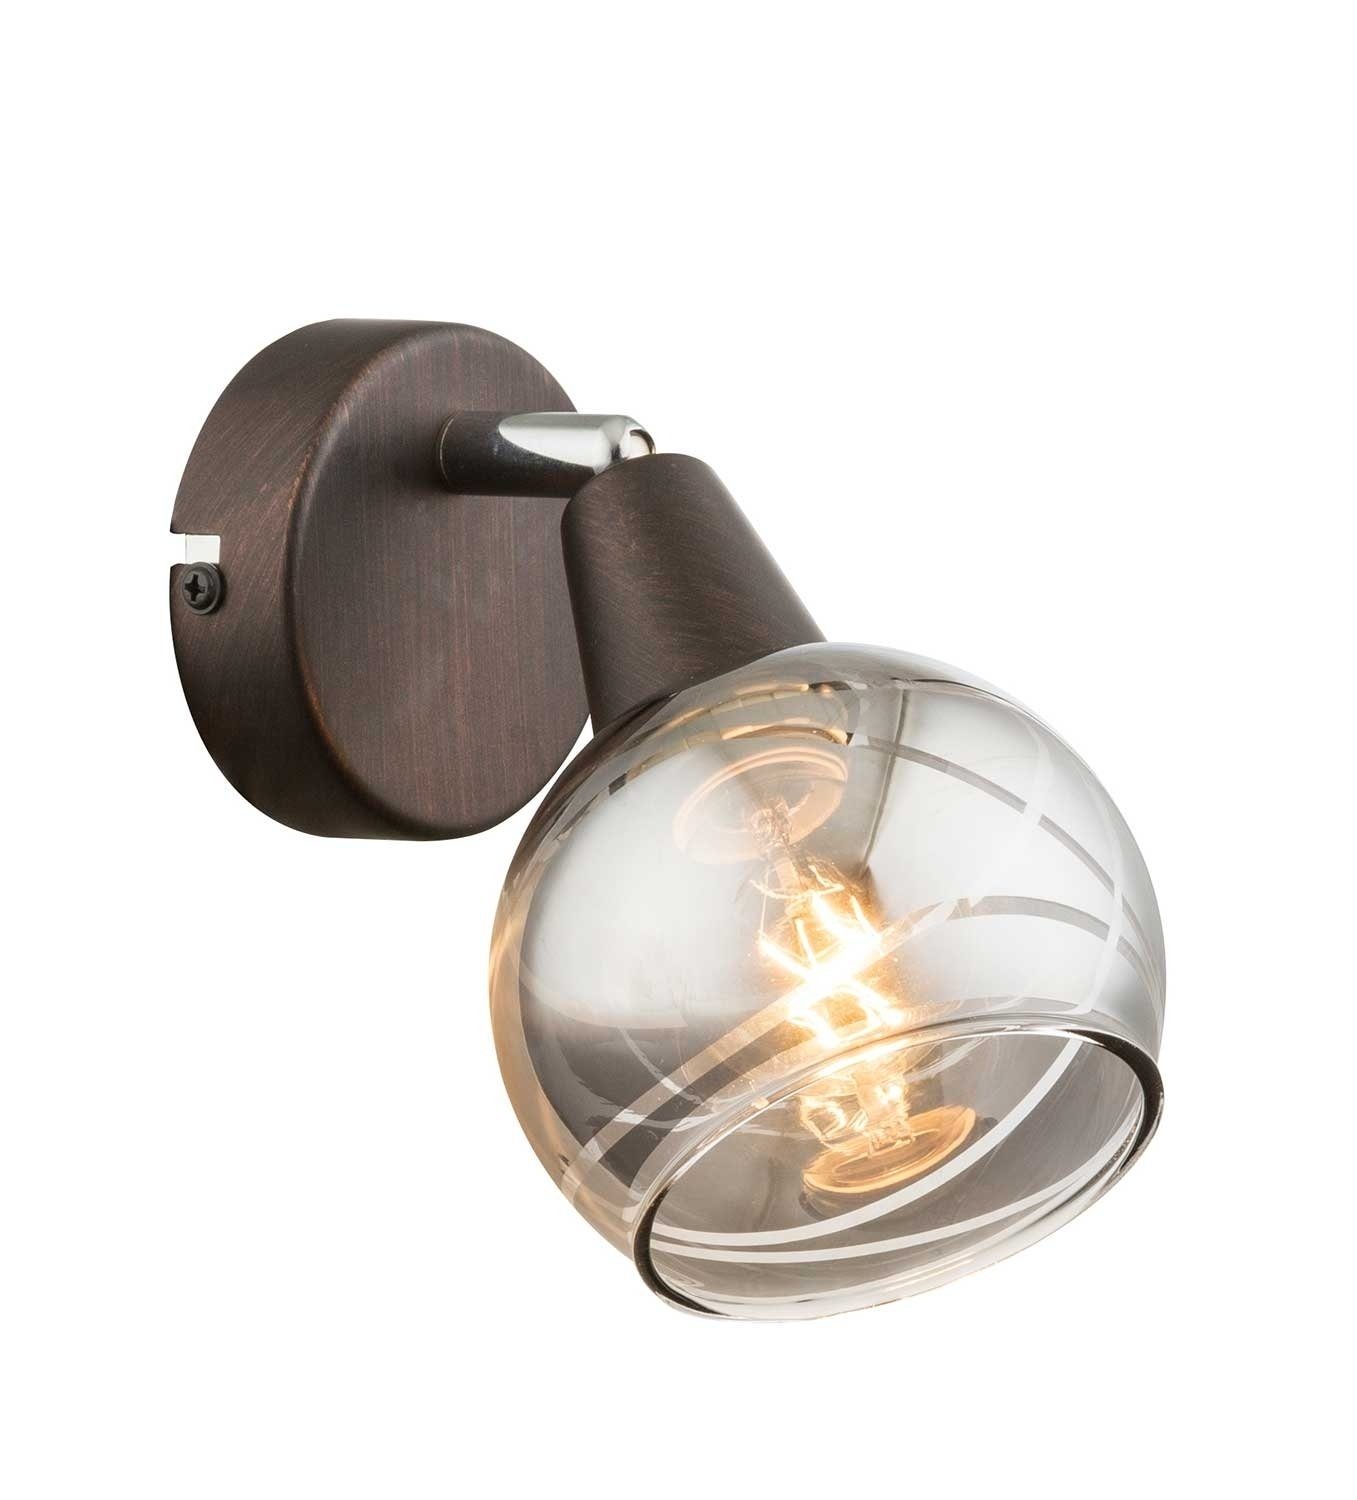 Globo LED Wandleuchte ISLA, 1-flammig, H 15 cm, Bronzefarben, Metall, LED wechselbar, Warmweiß, Lampenschirm aus Rauchglas